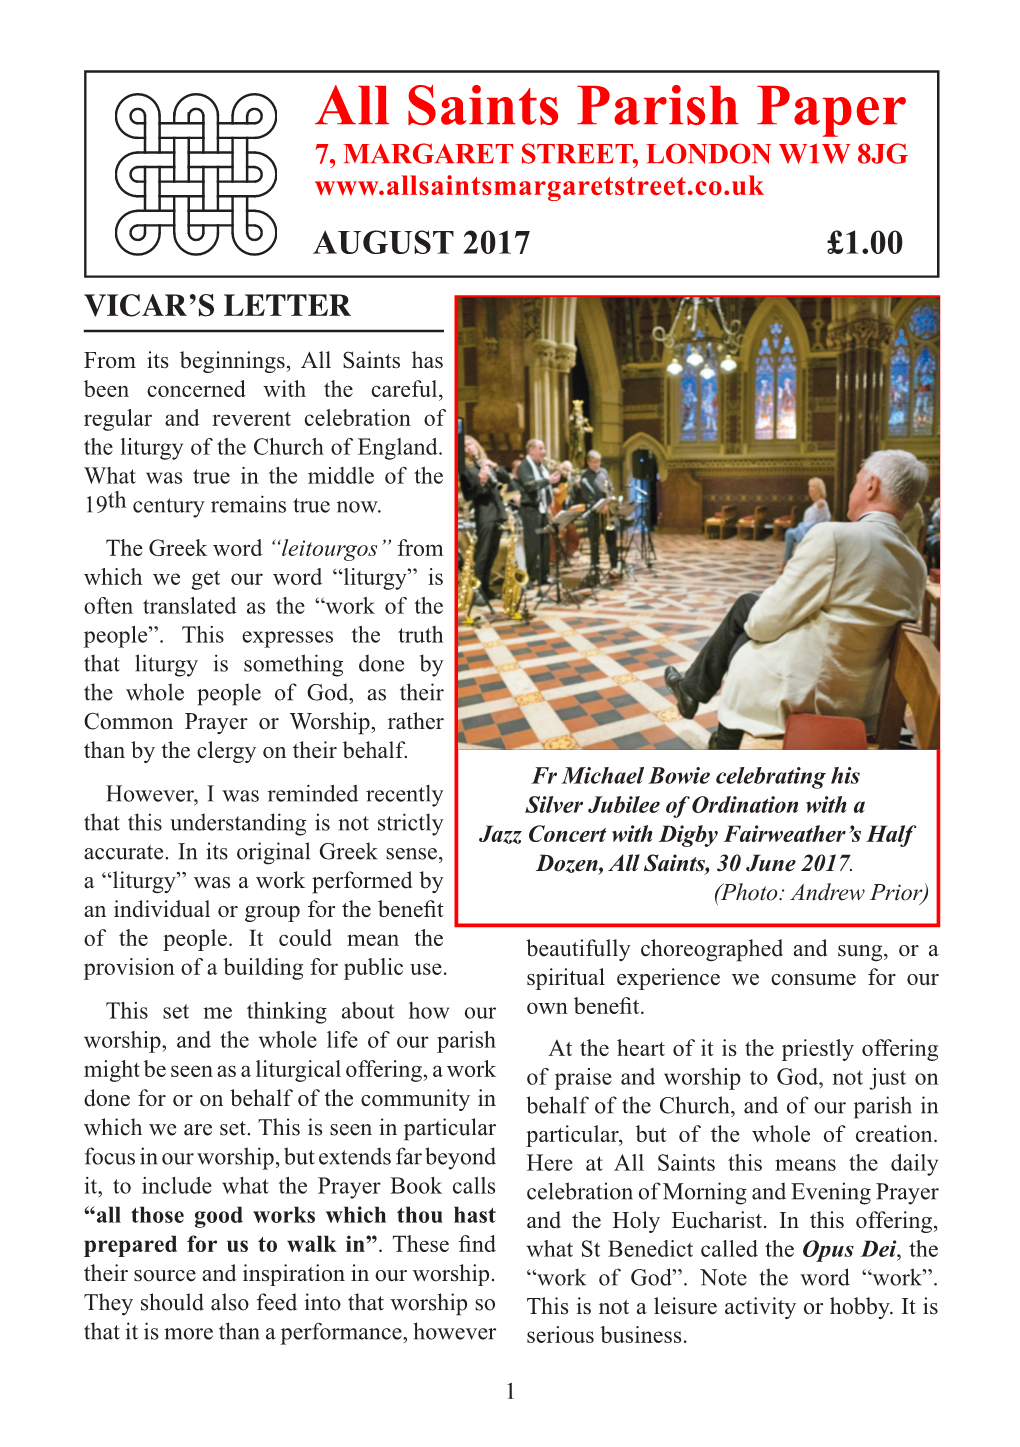 All Saints Parish Paper 7, MARGARET STREET, LONDON W1W 8JG AUGUST 2017 £1.00